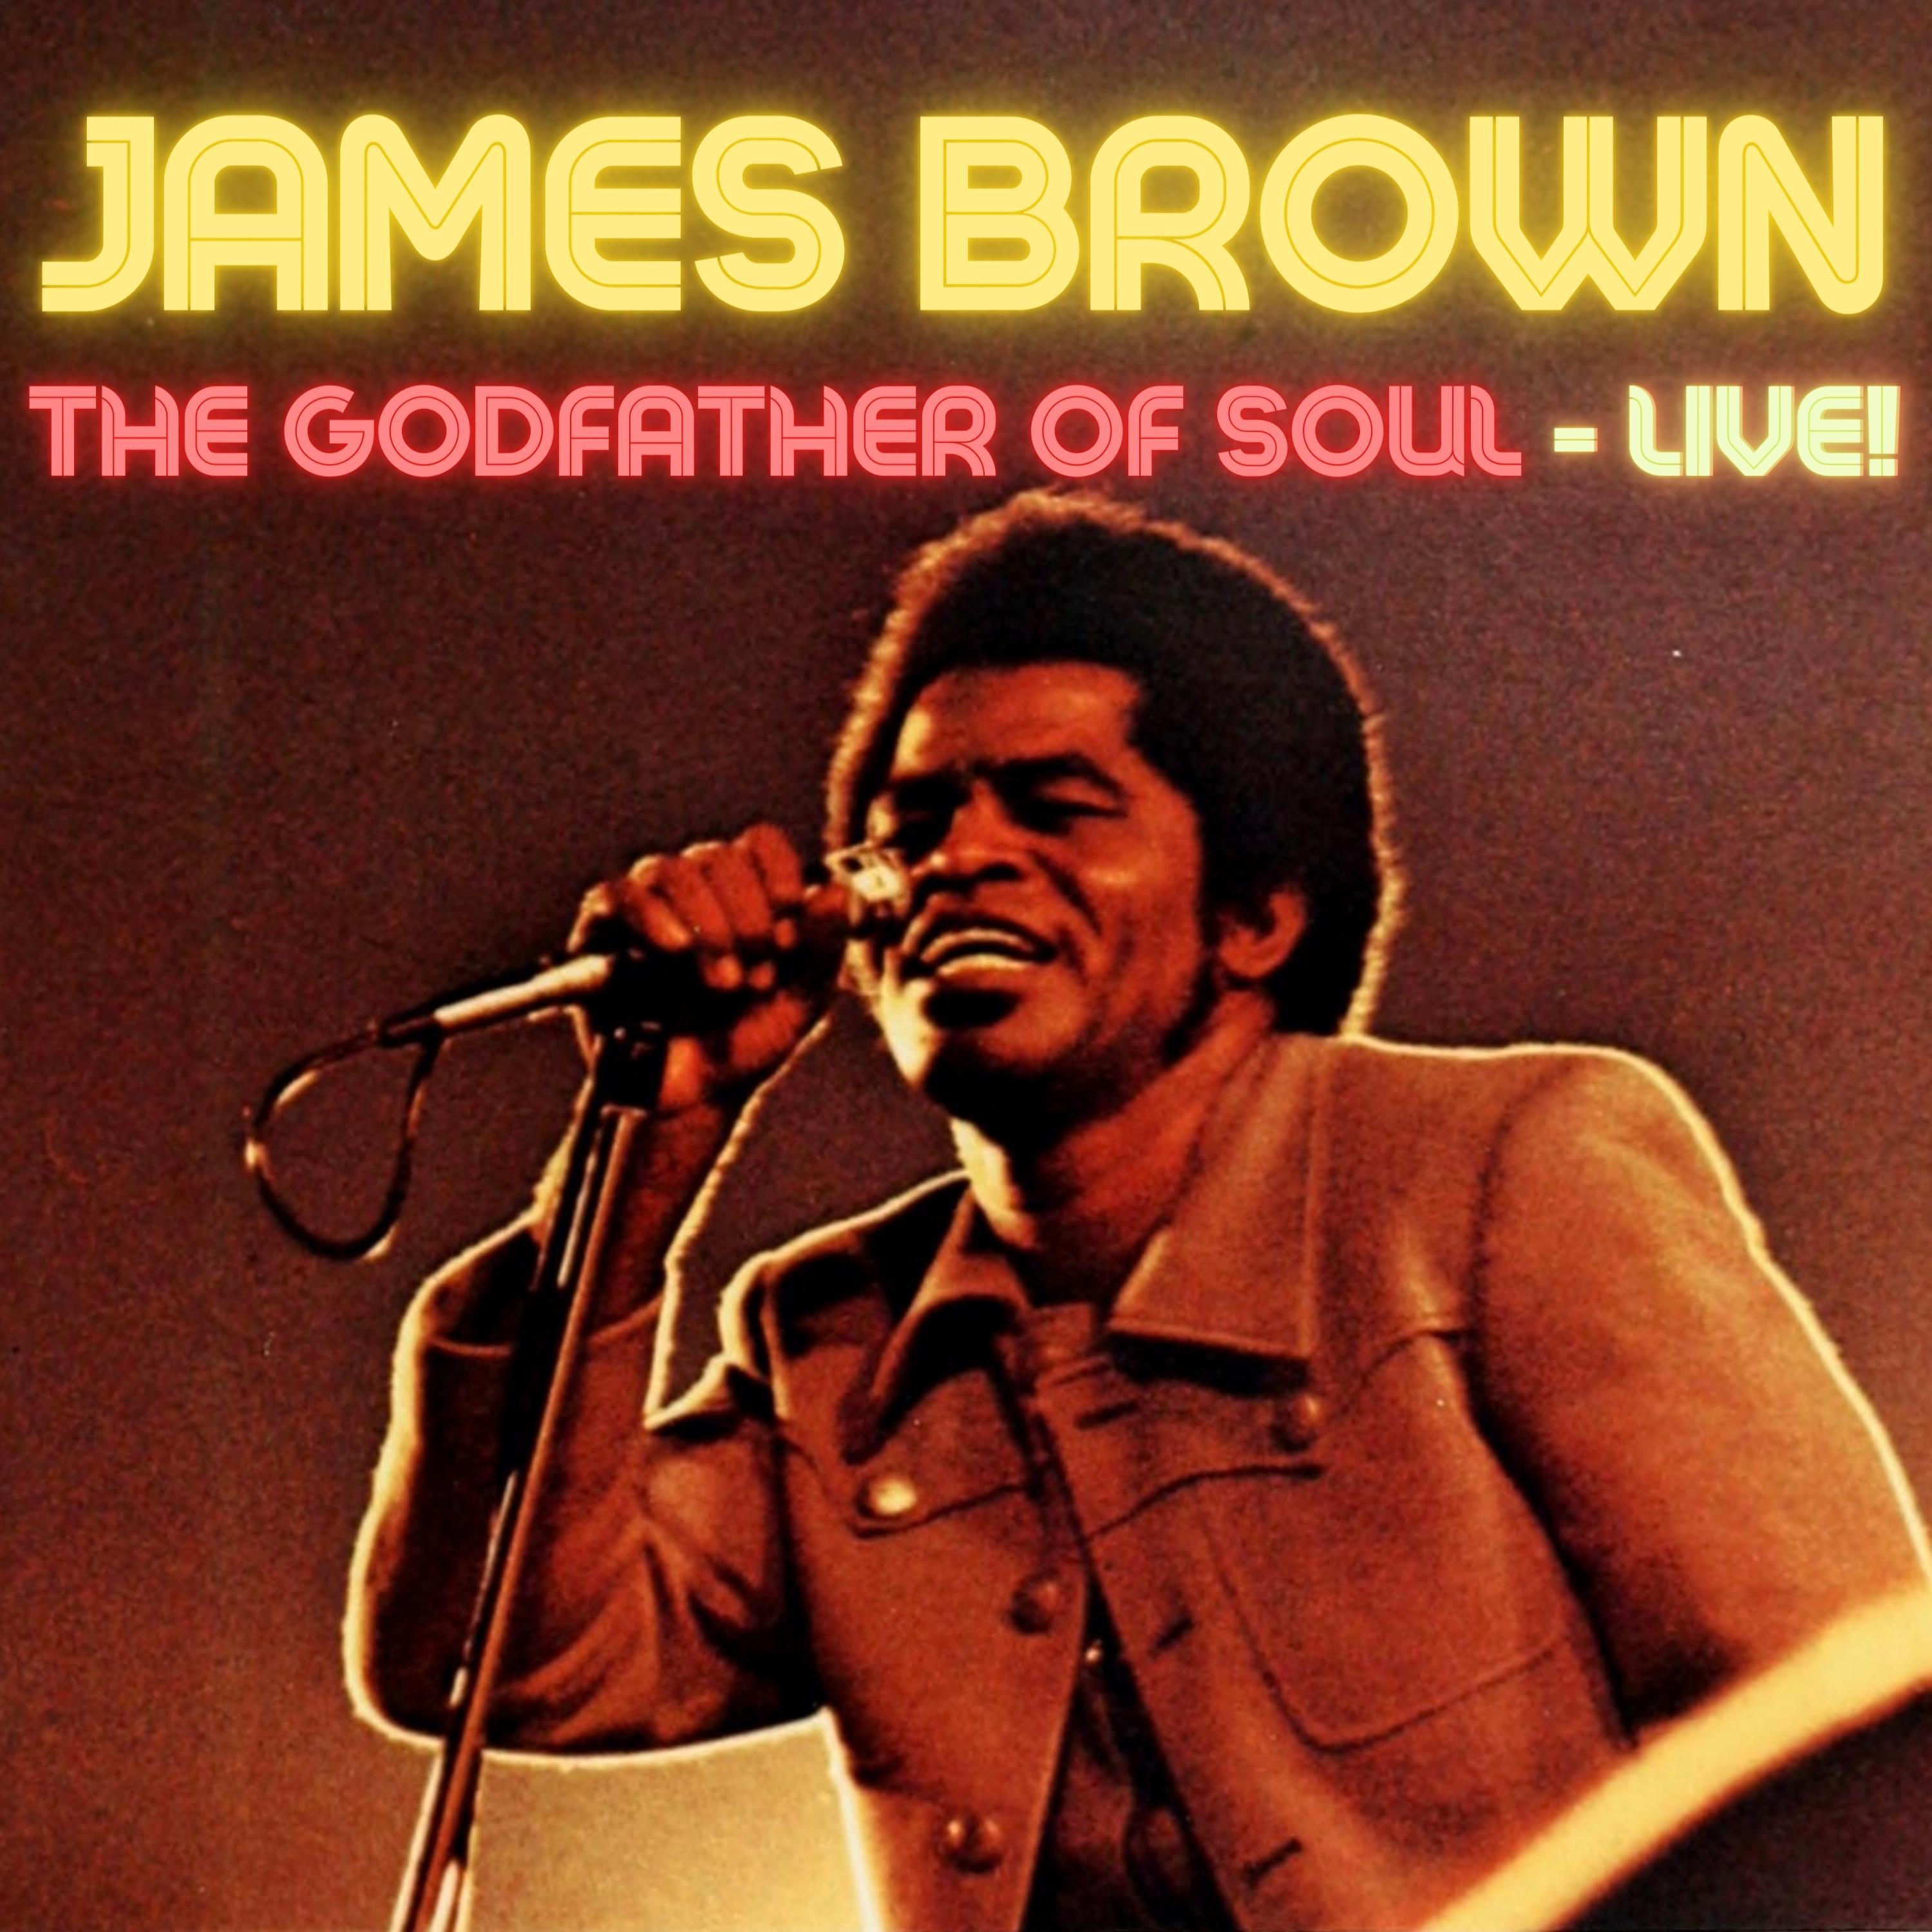 James Brown - Hot Pants (Live)